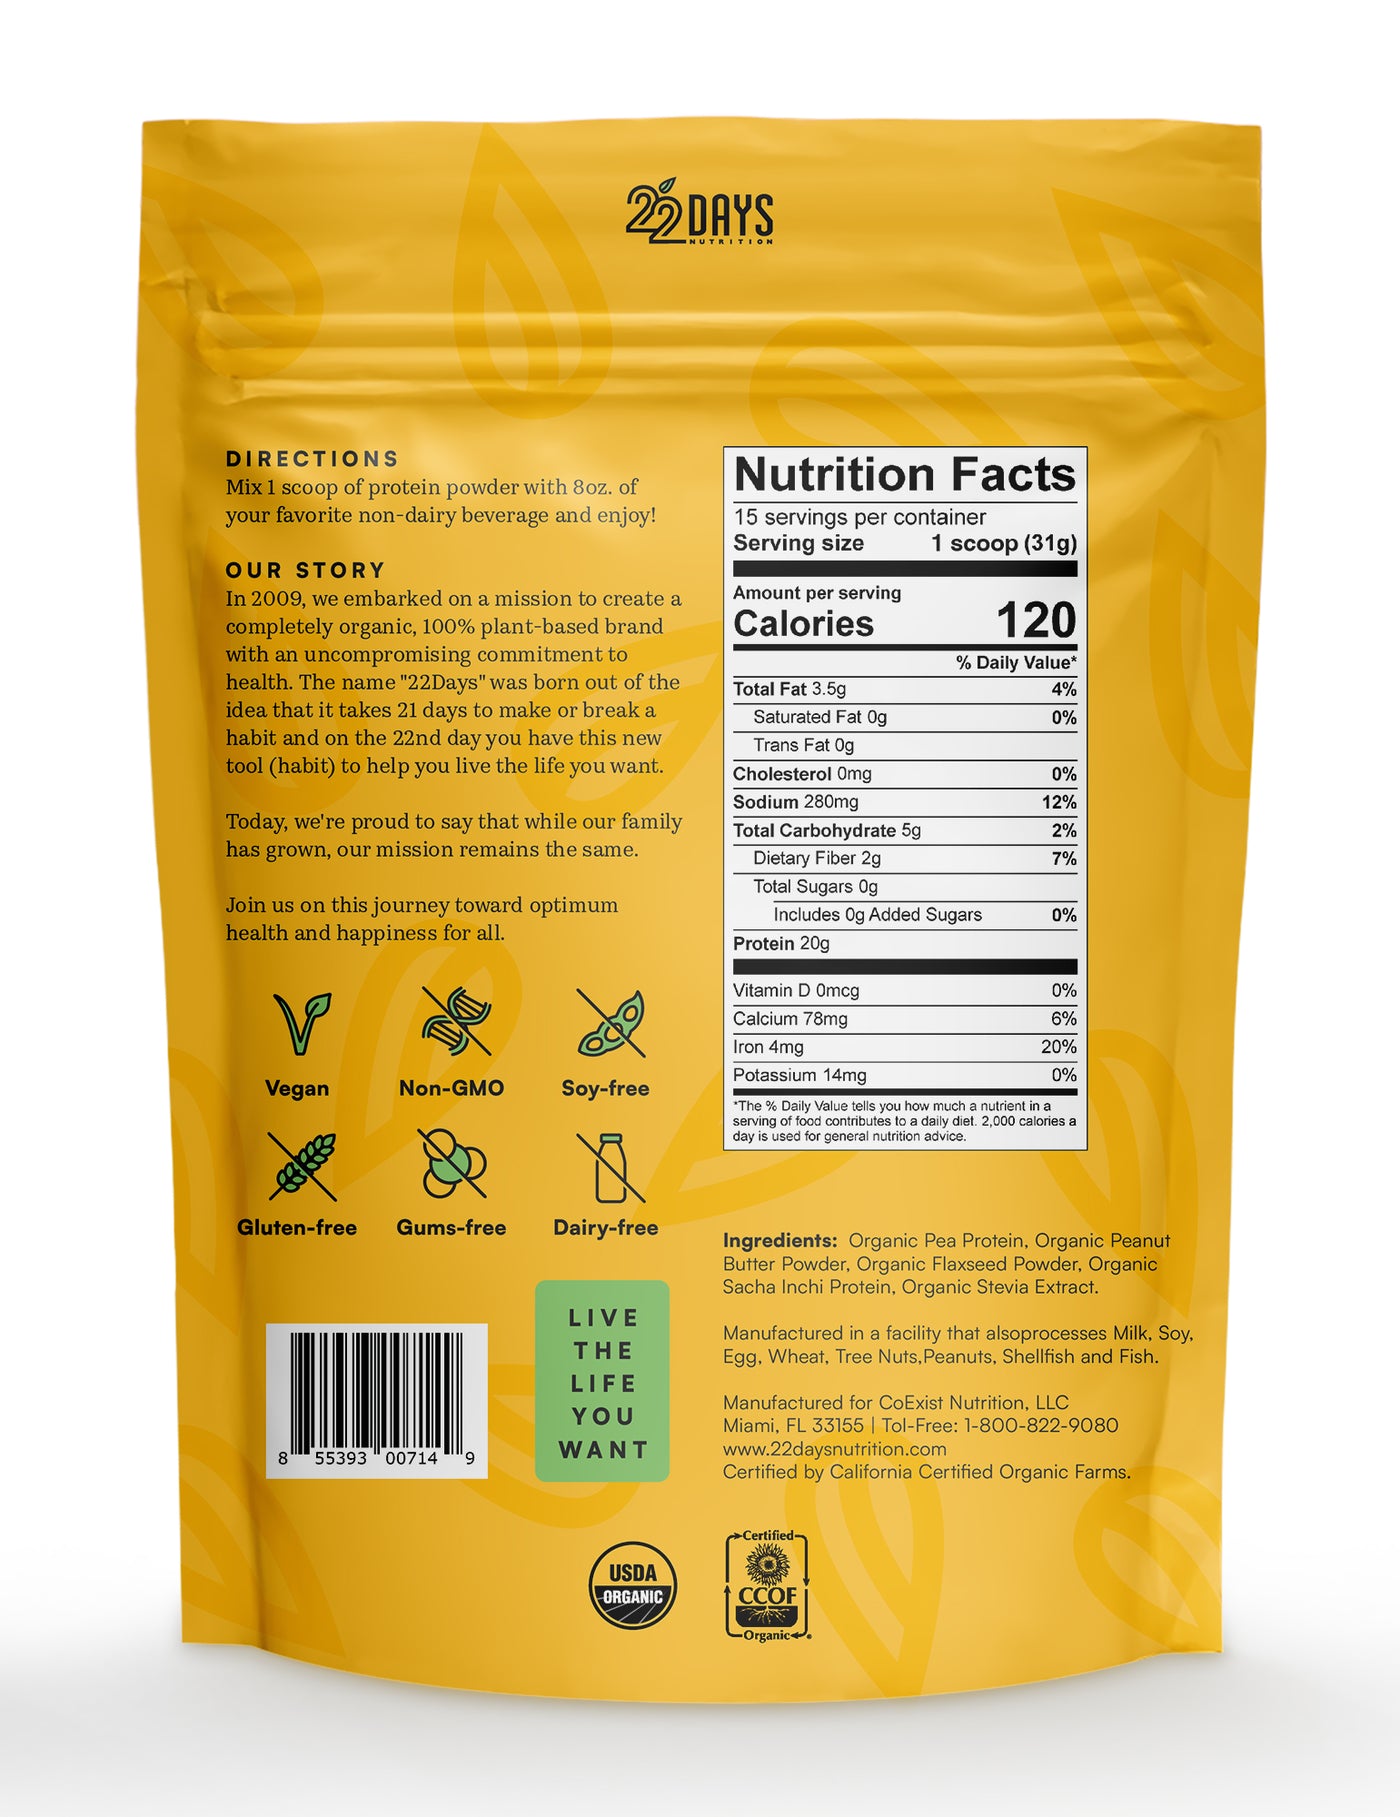 Organic Plant Based Protein Powder - Peanut Butter